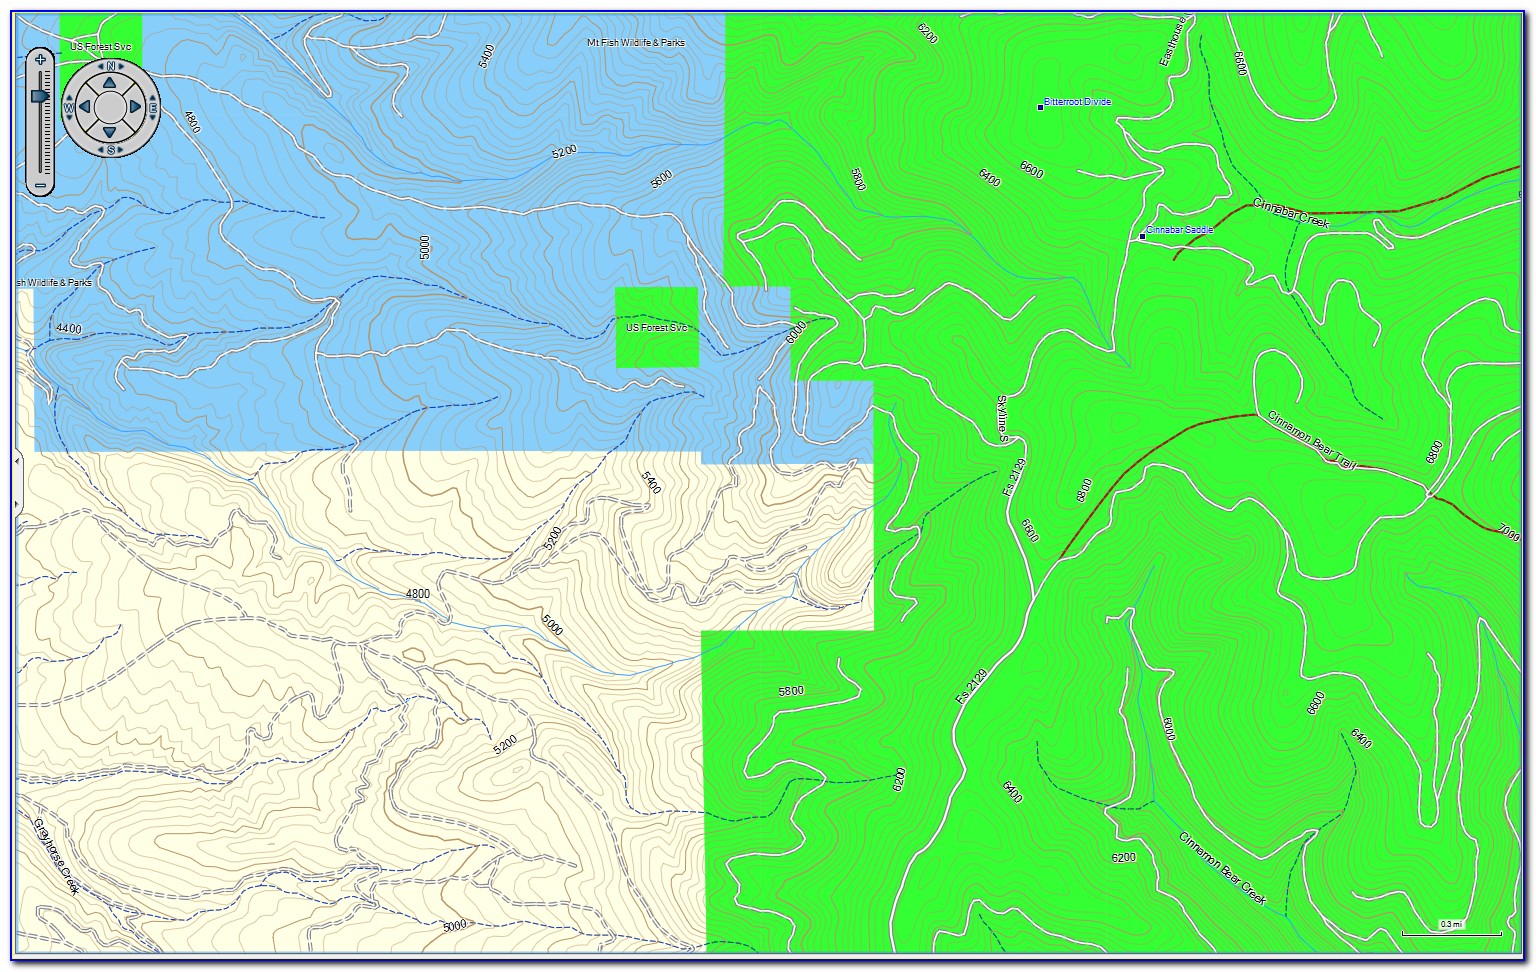 Montana Mapping & Gps Llc